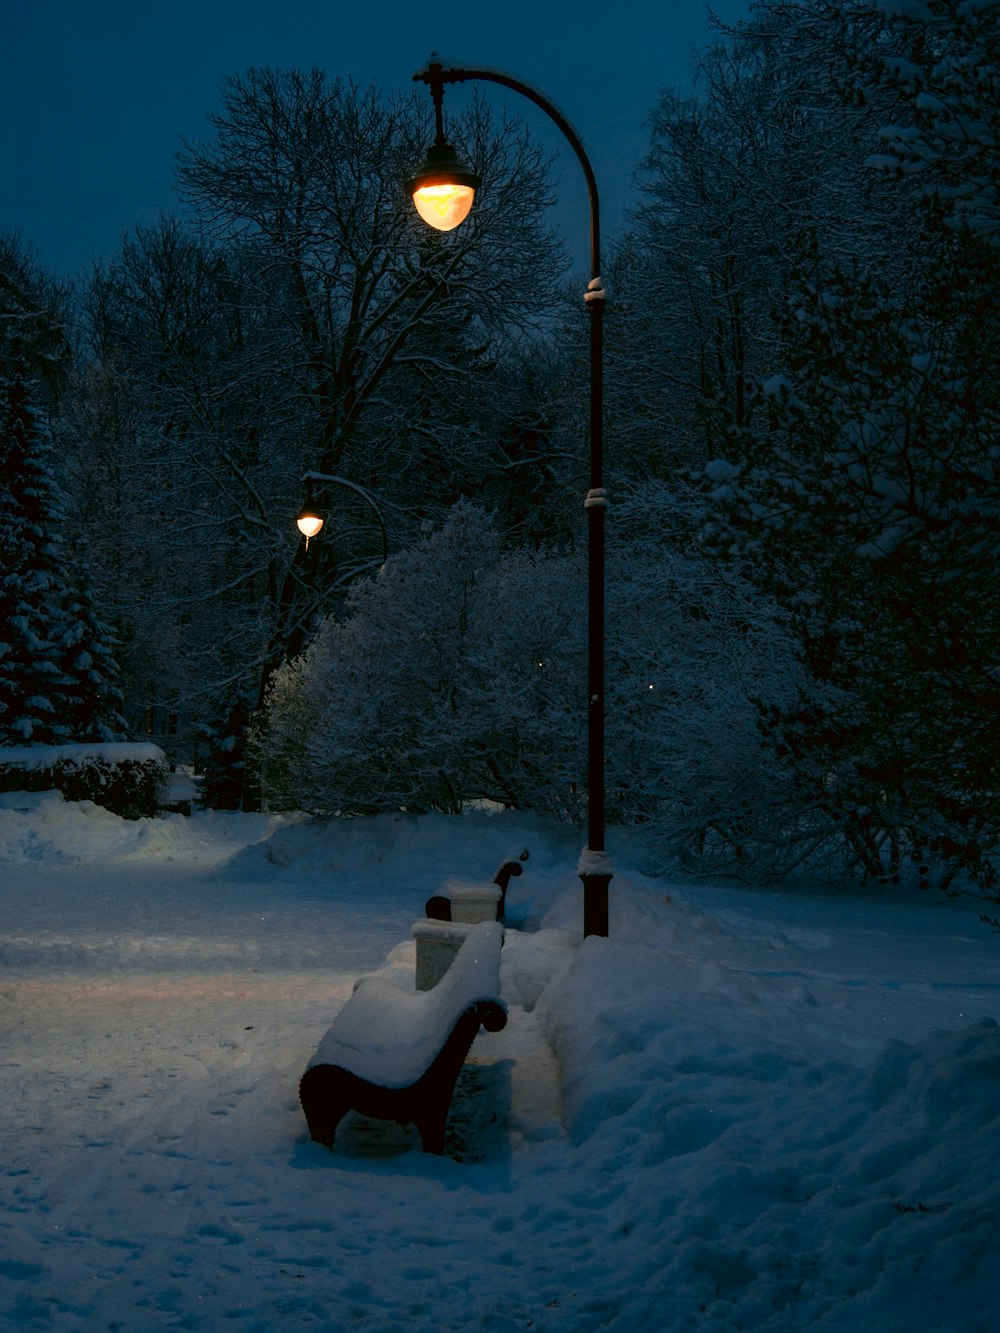 una panchina coperta di neve sotto un lampione